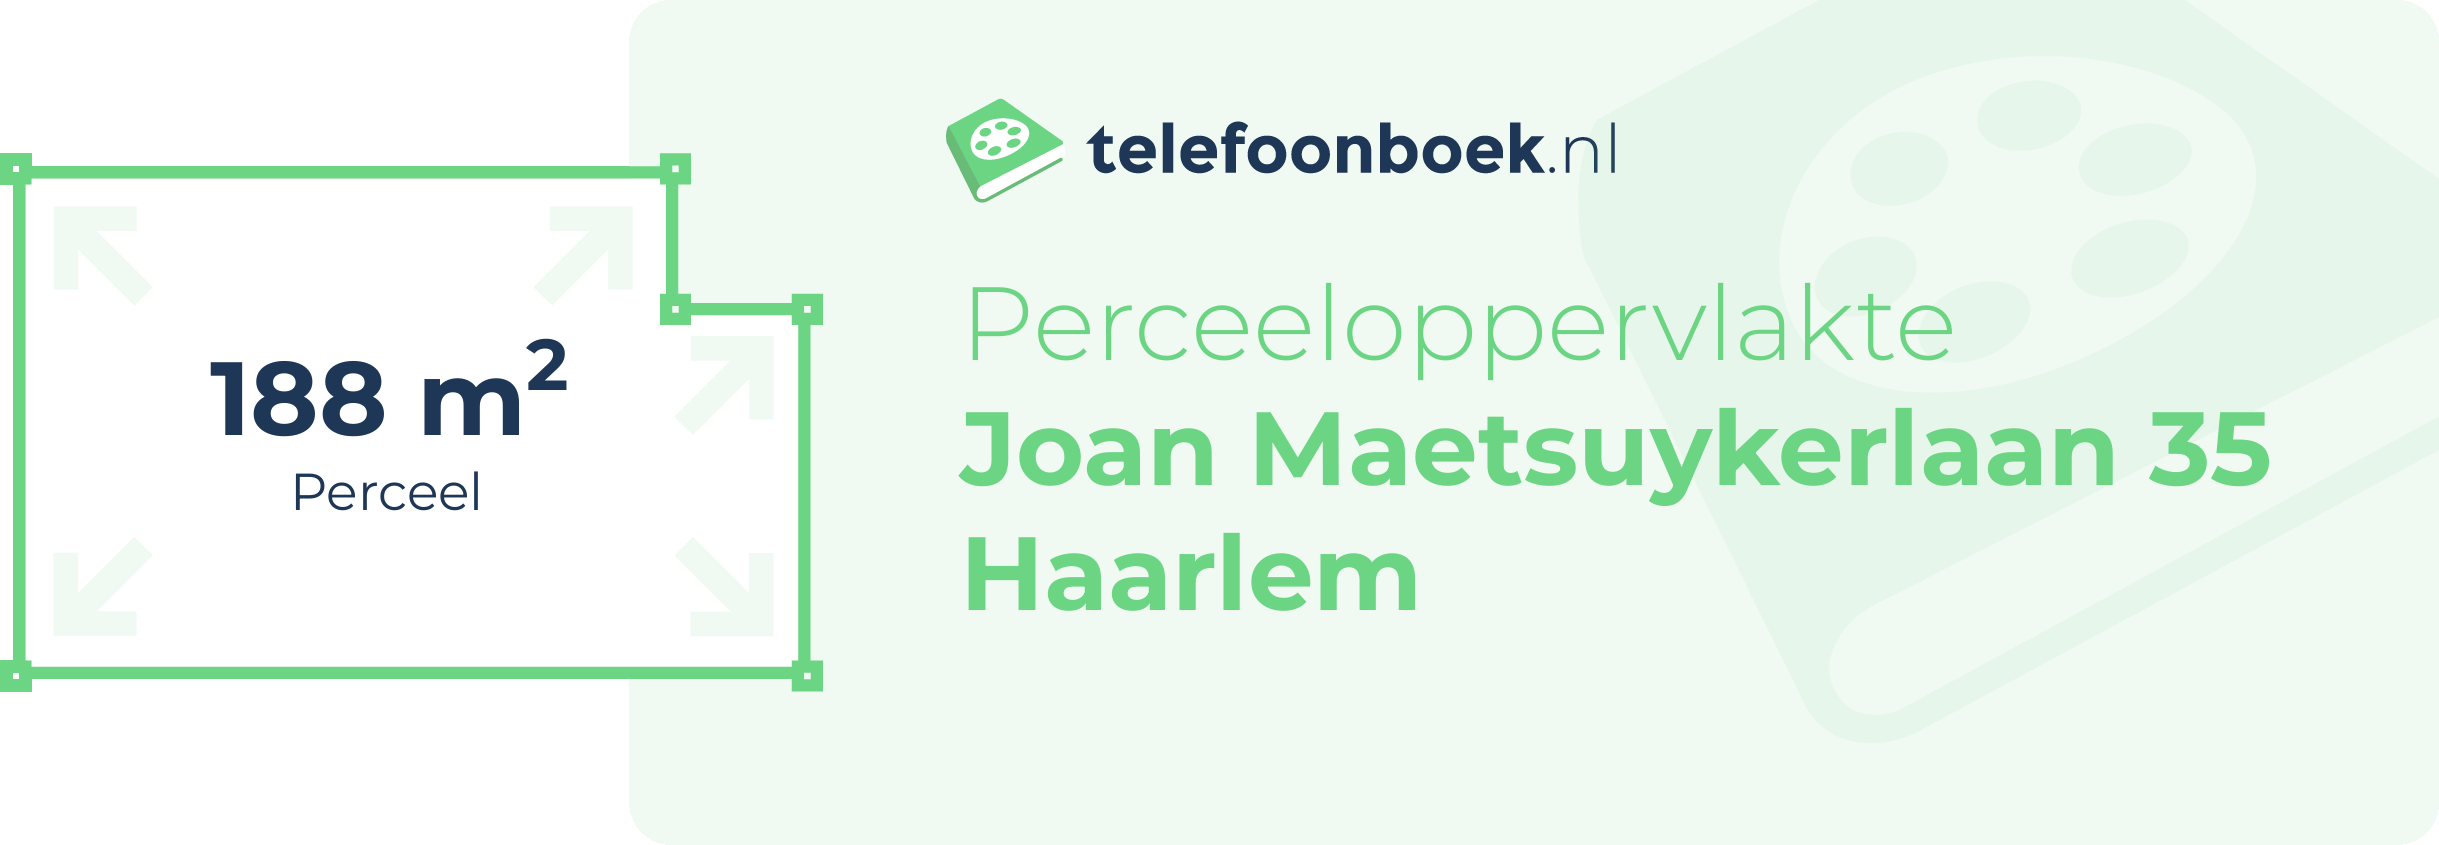 Perceeloppervlakte Joan Maetsuykerlaan 35 Haarlem